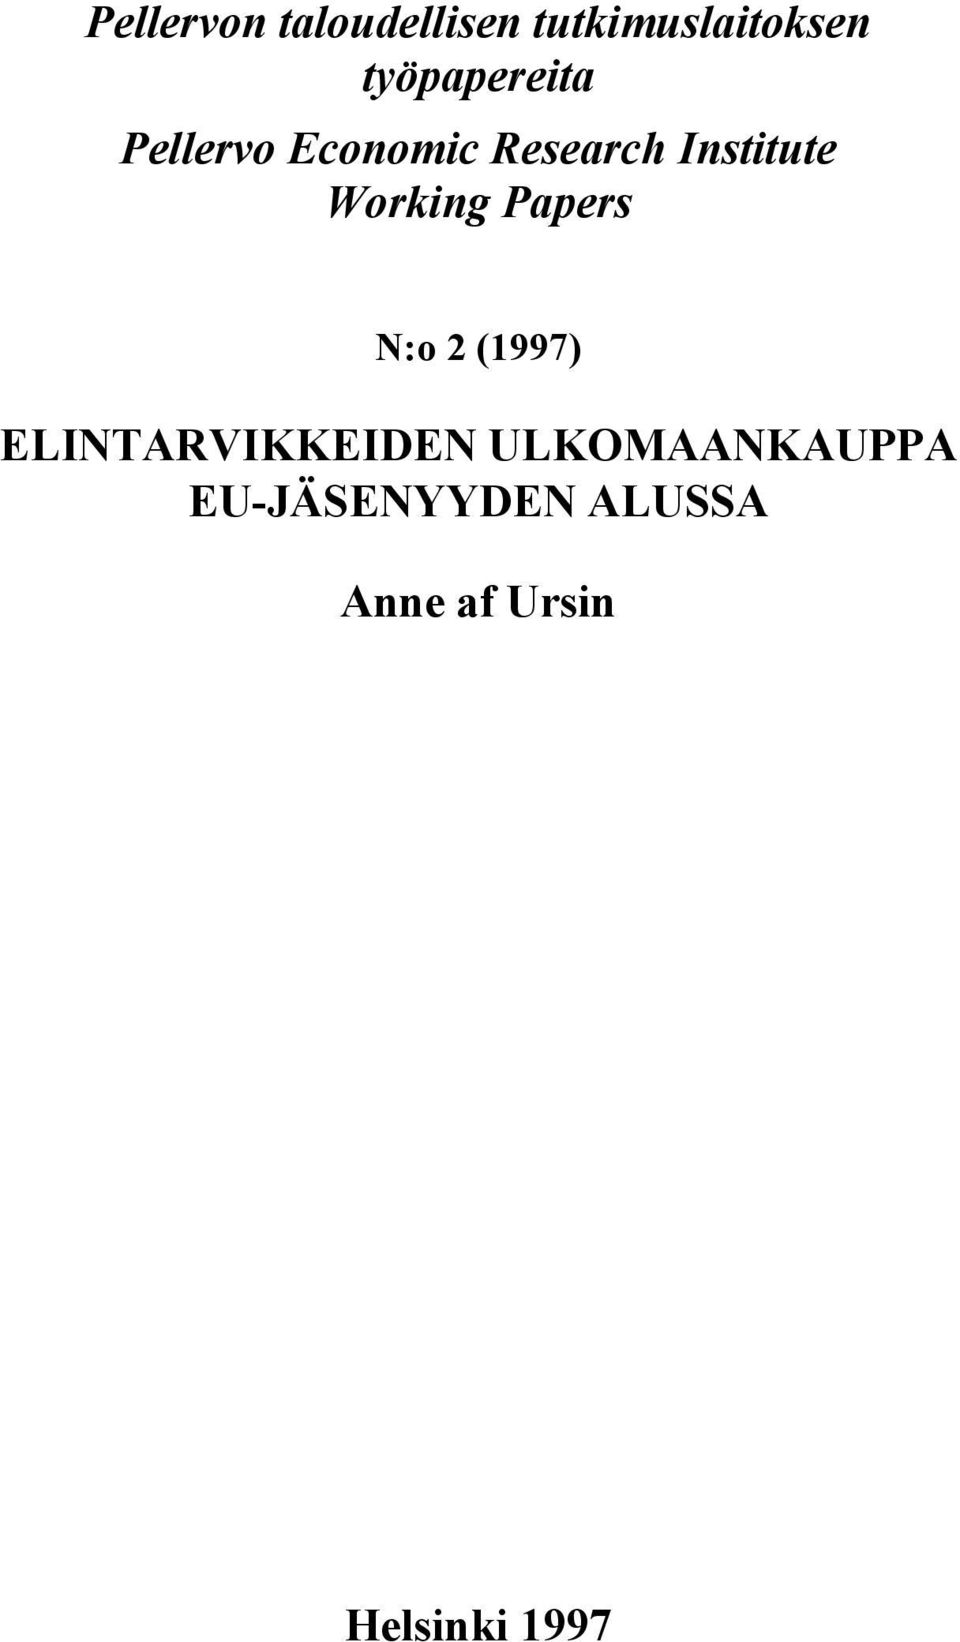 Working Papers N:o 2 (1997) ELINTARVIKKEIDEN